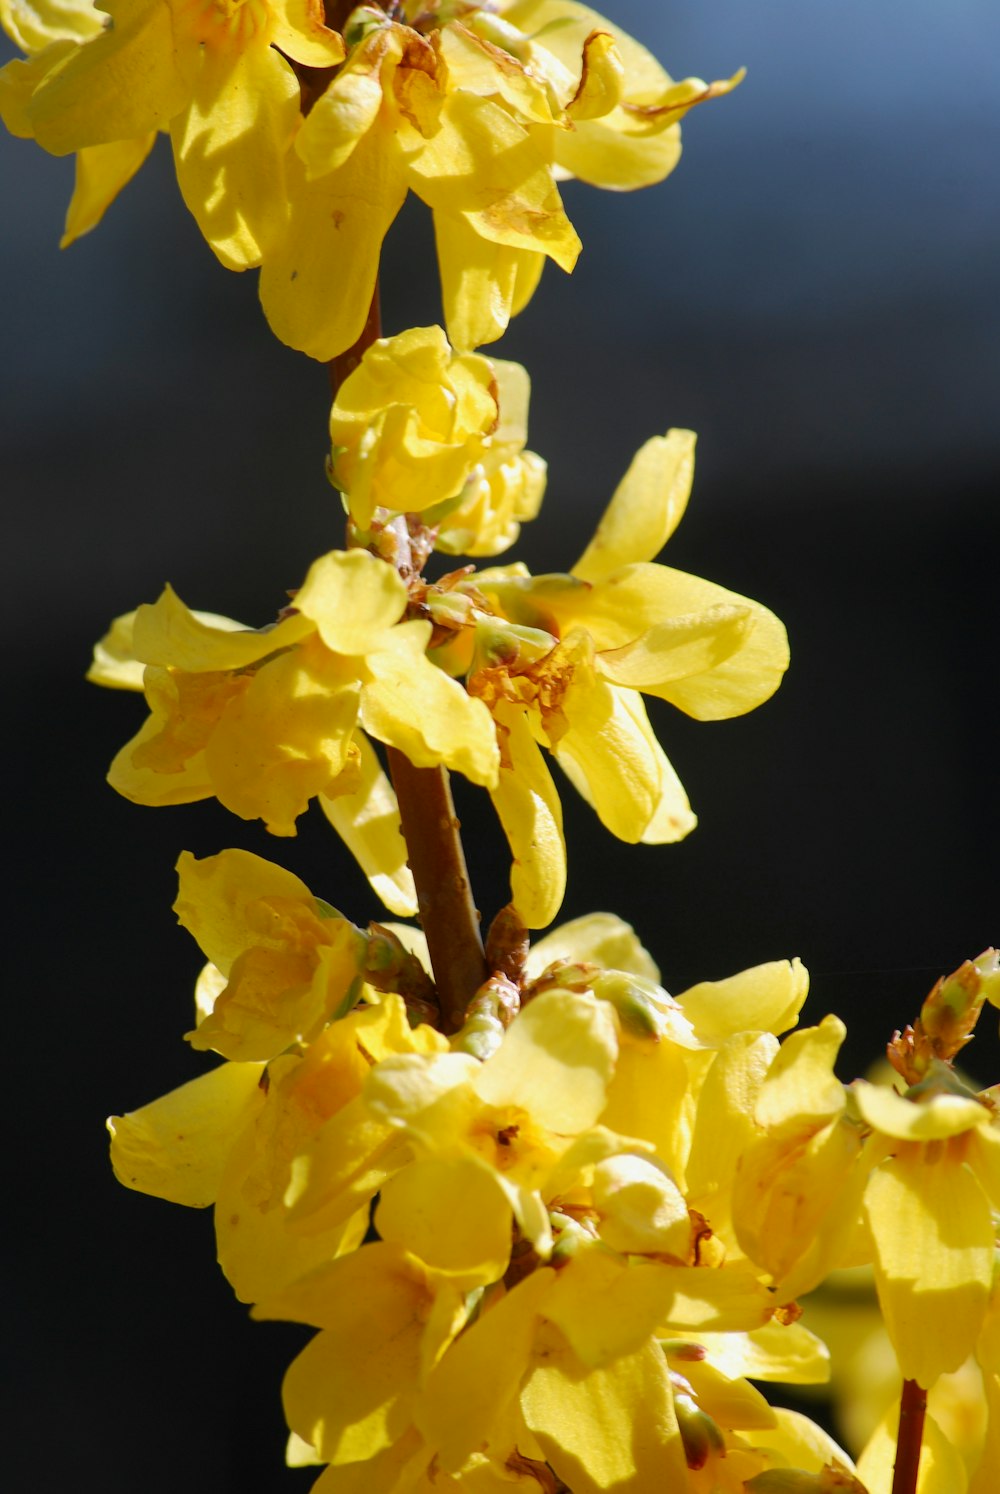 yellow flowers on brown stem